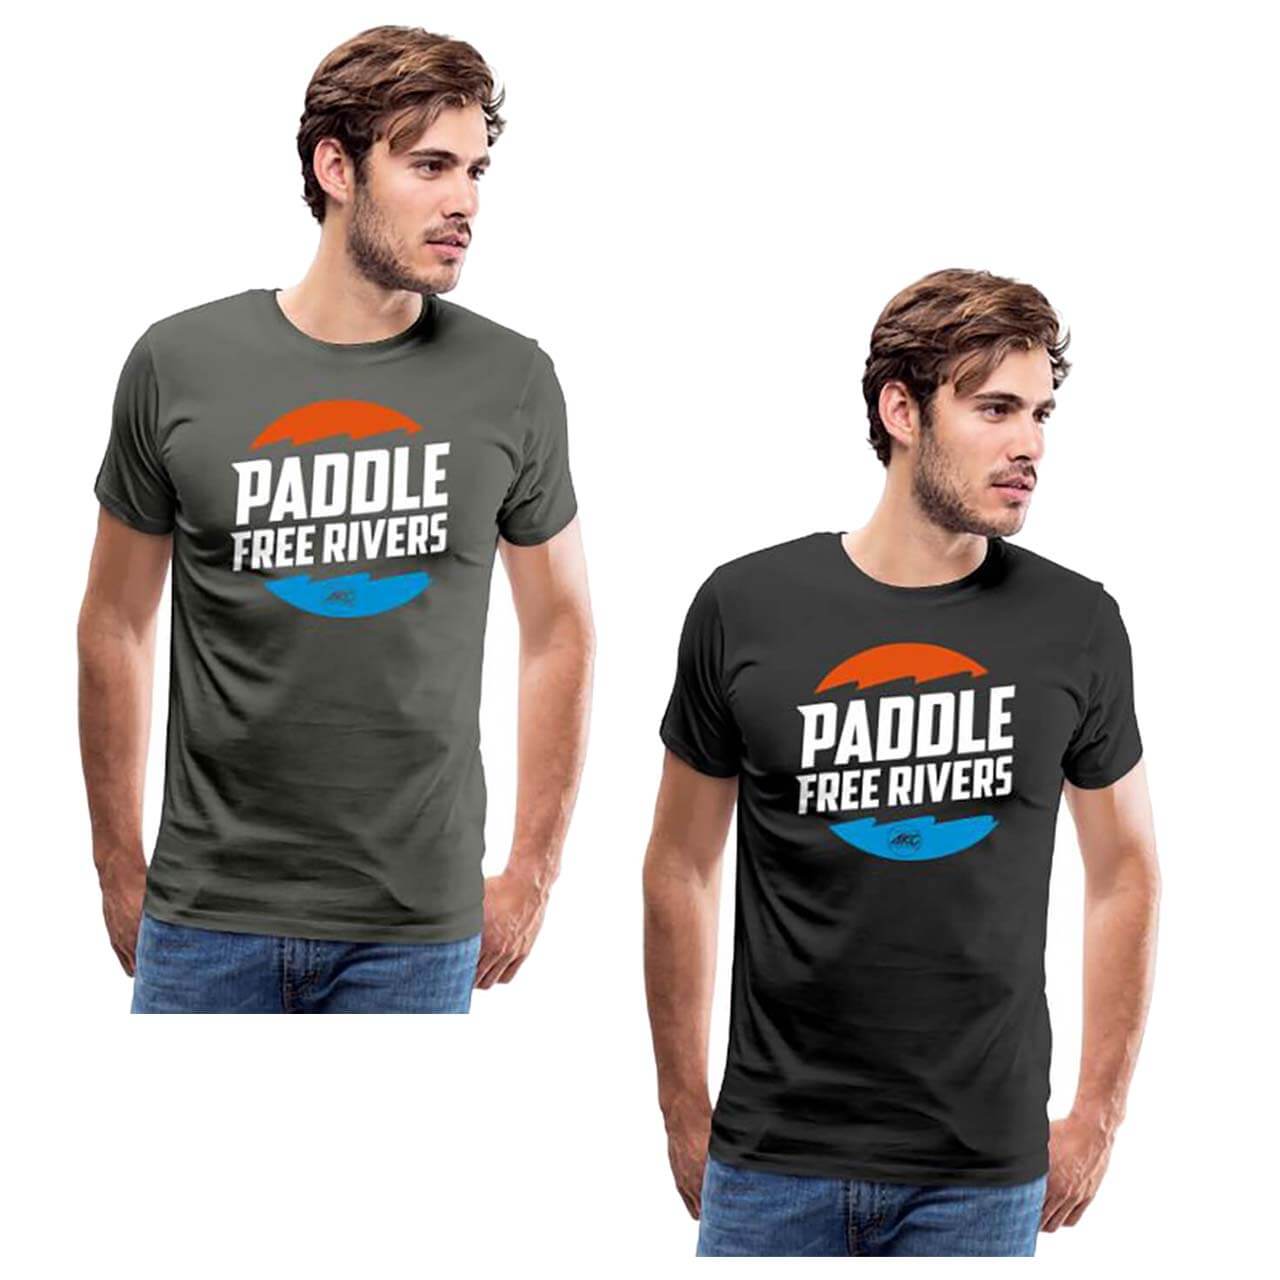 AKC Paddle Free Rivers T-Shirt